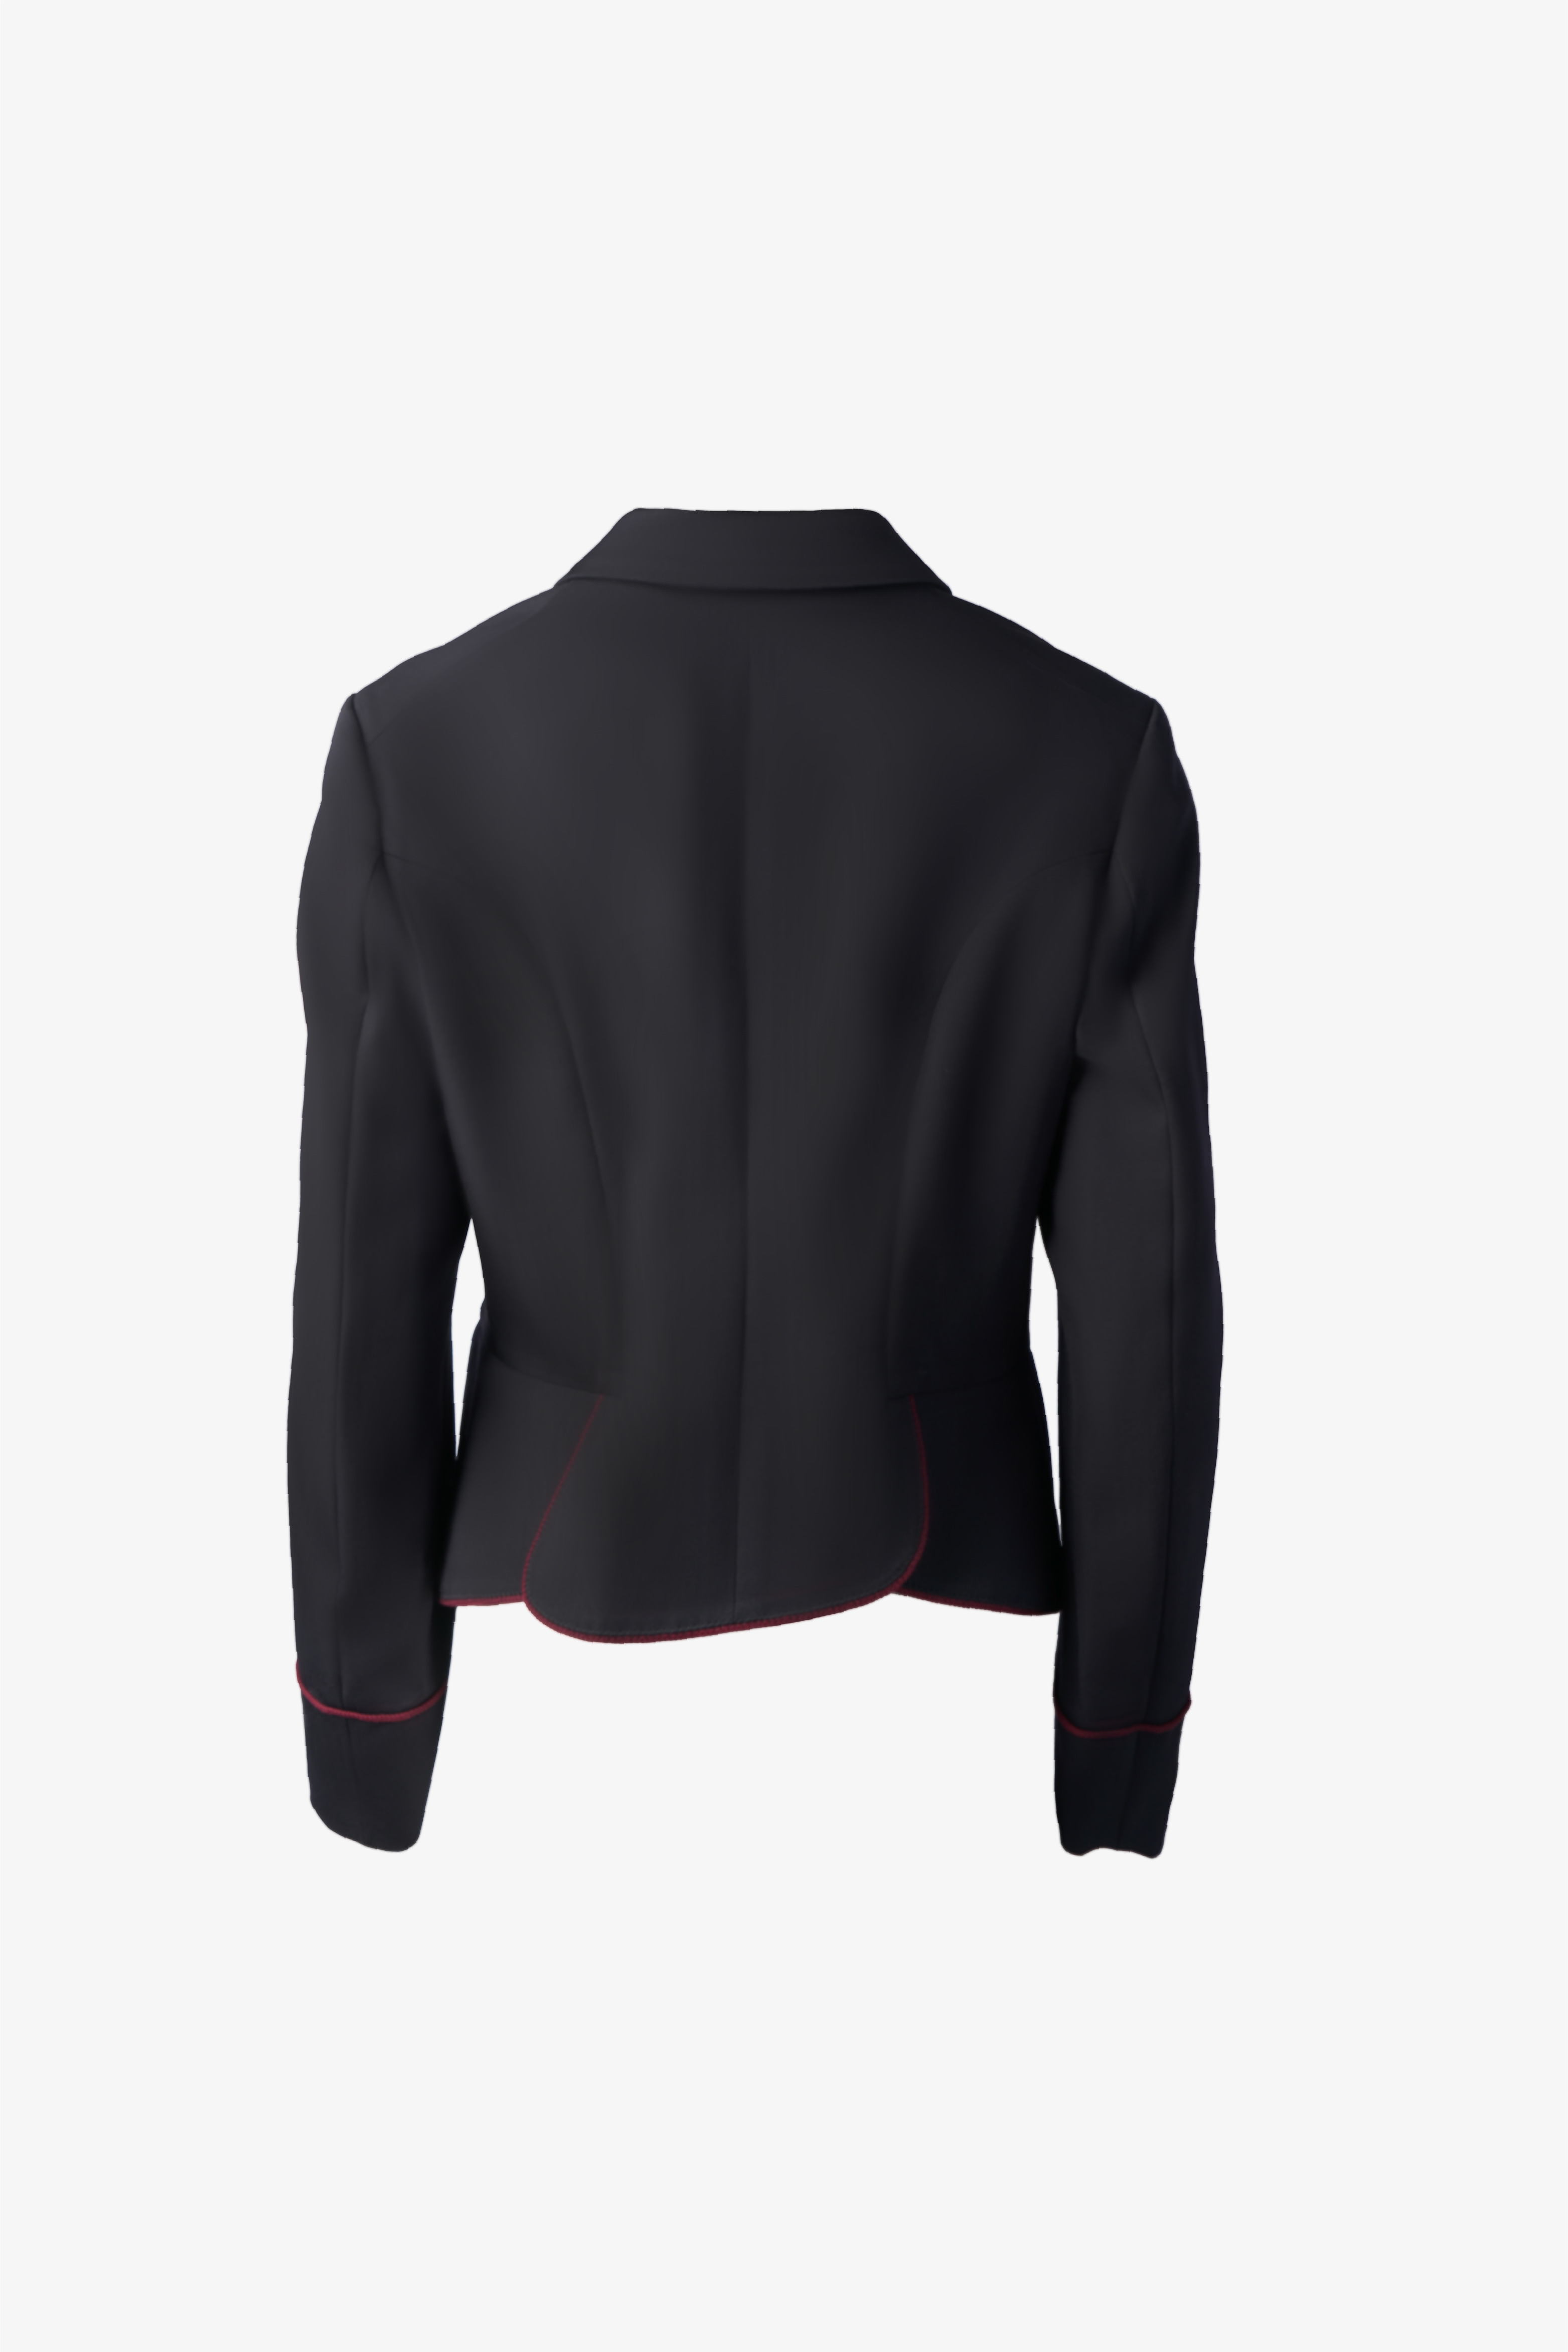 Selectshop FRAME - COMME DES GARÇONS GIRL Coach Jacket Outerwear Dubai